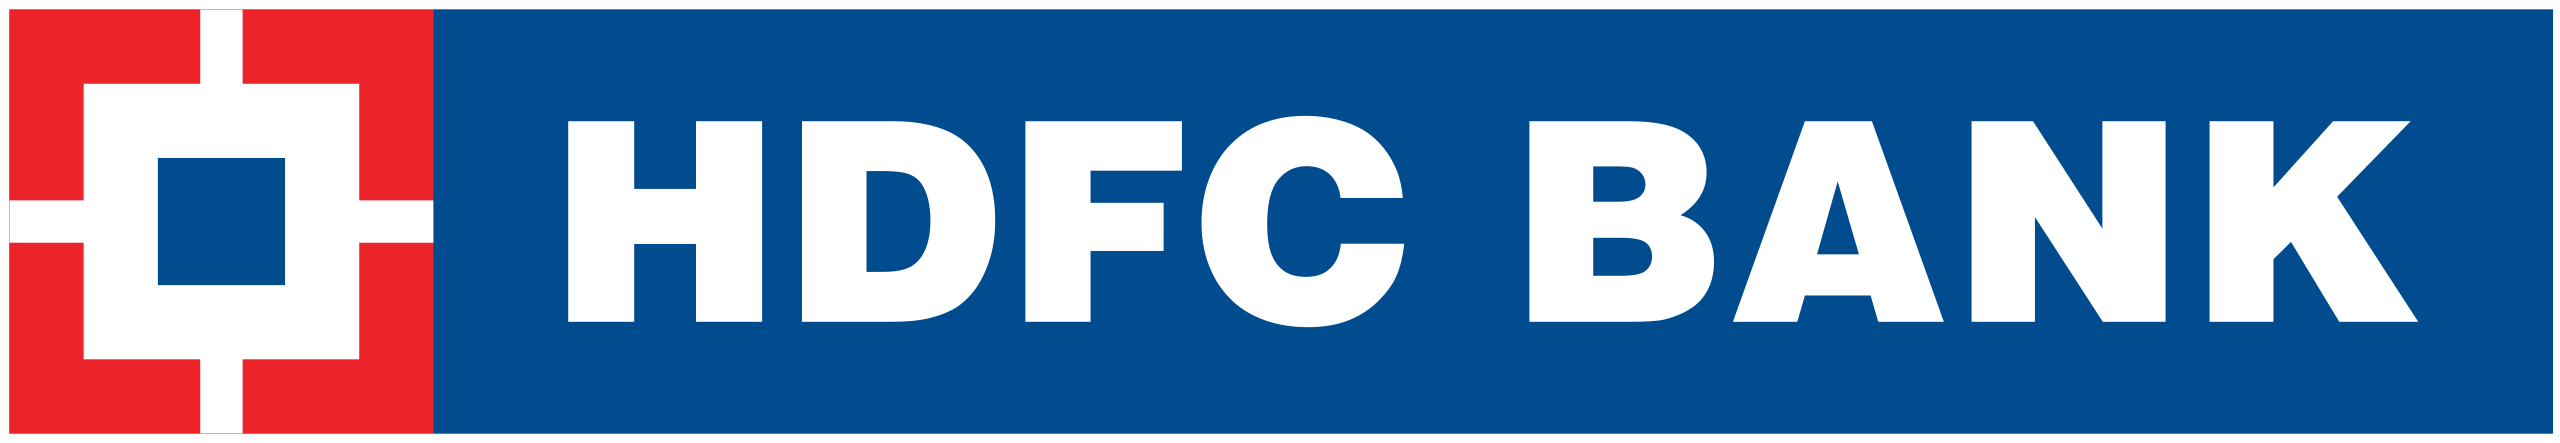 HDFC_Bank_Logo